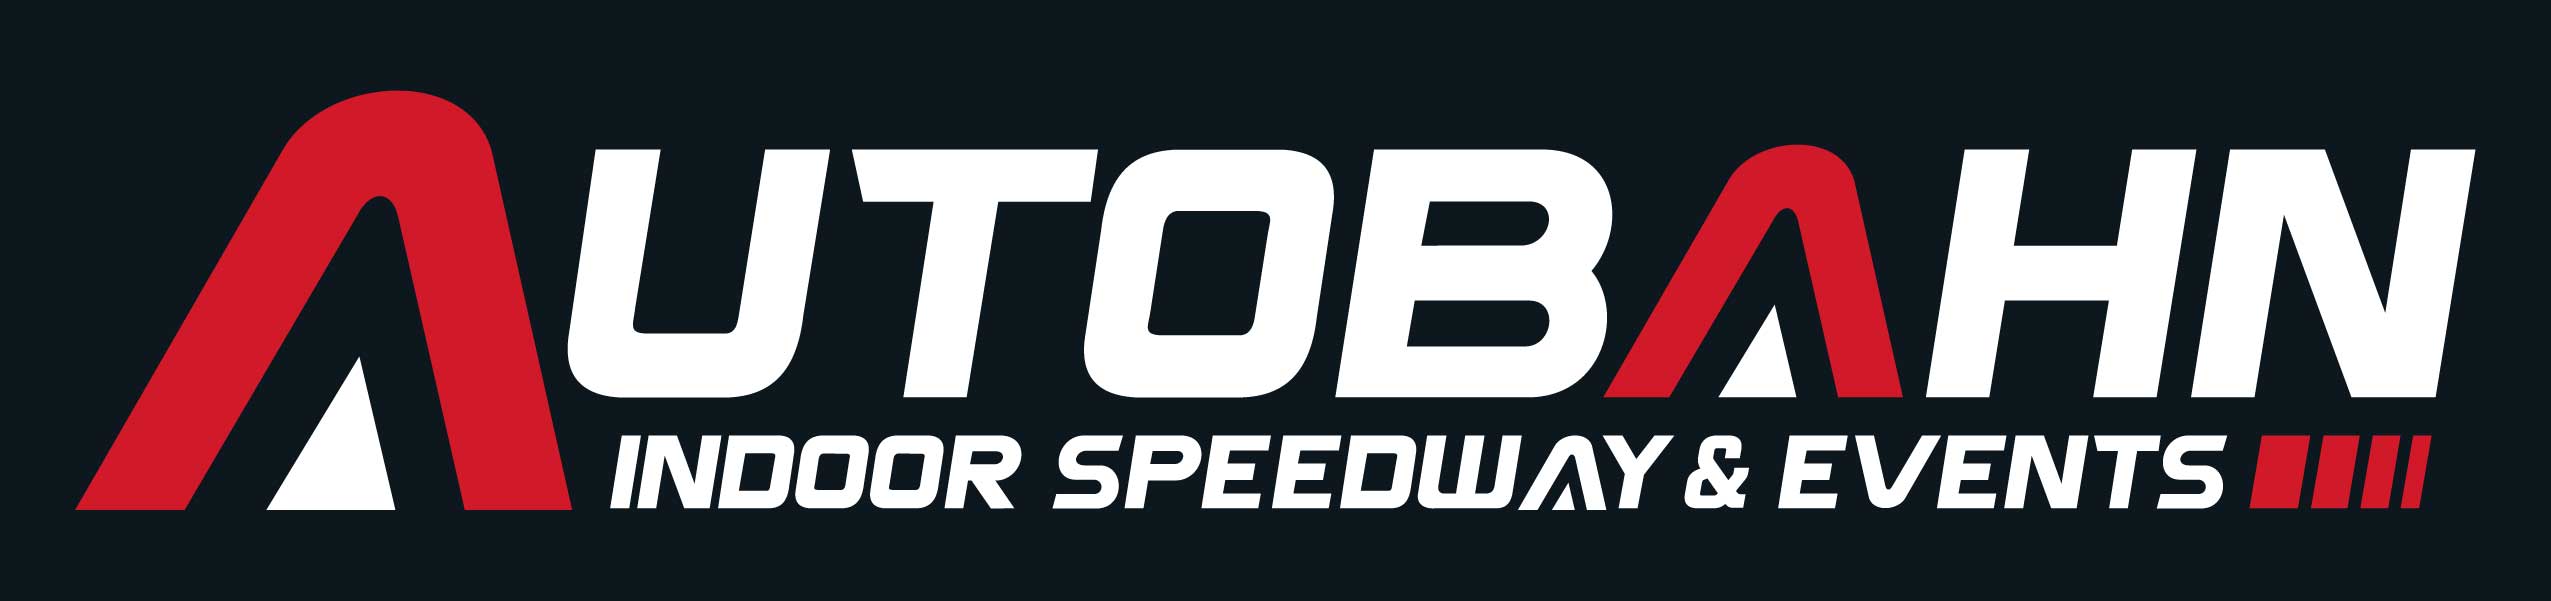 Autobahn Indoor Speedway & Events Logo